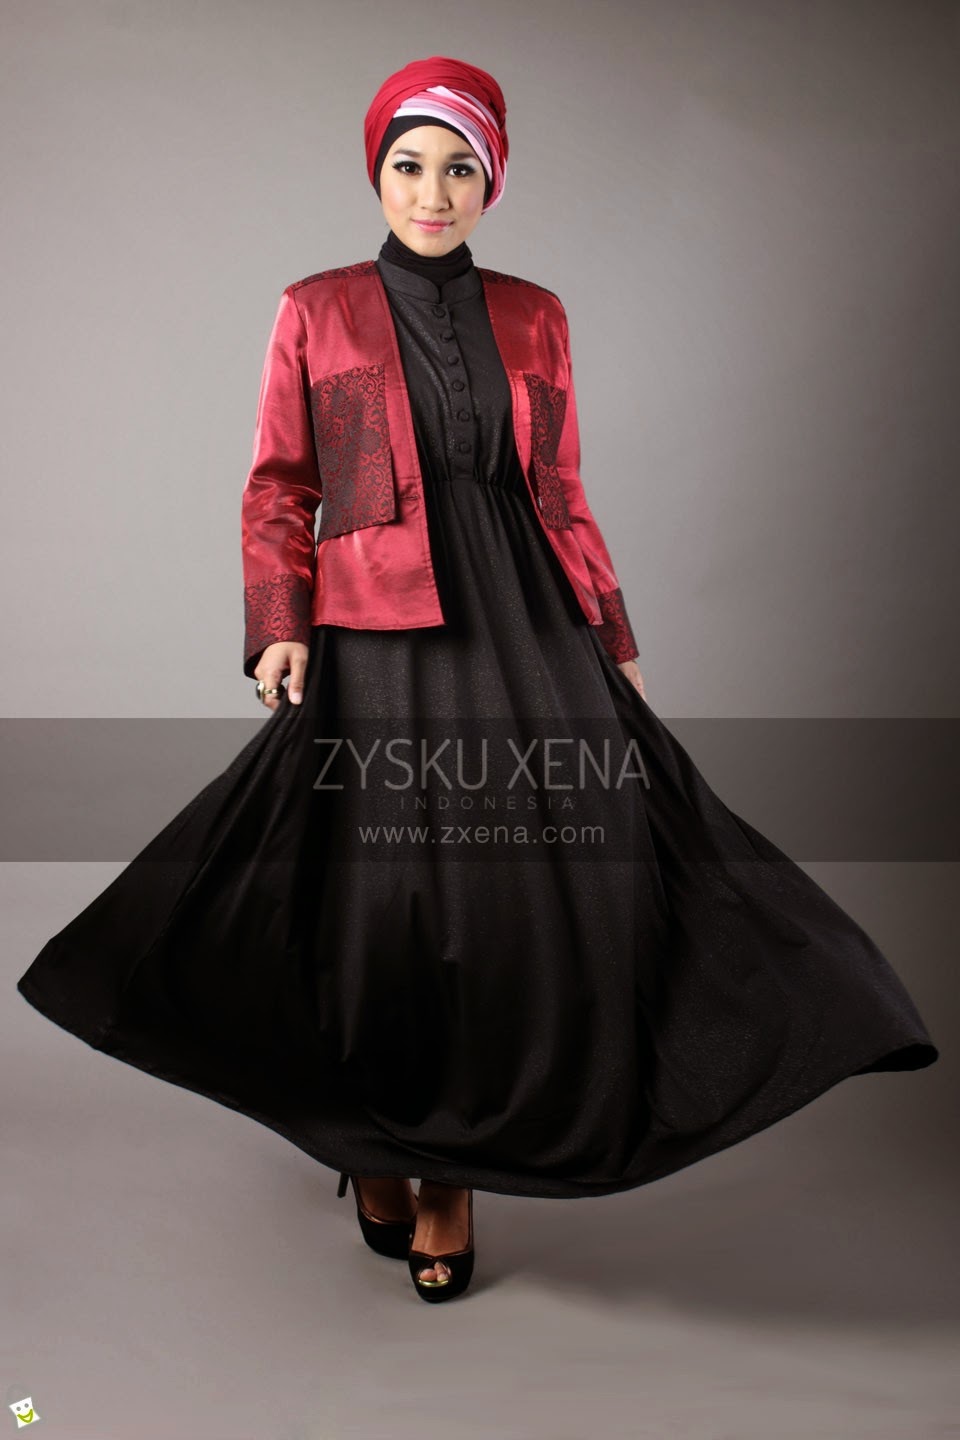 Koleksi Baju  Muslim Zysku  Xena  Terbaik dan Terbaru 